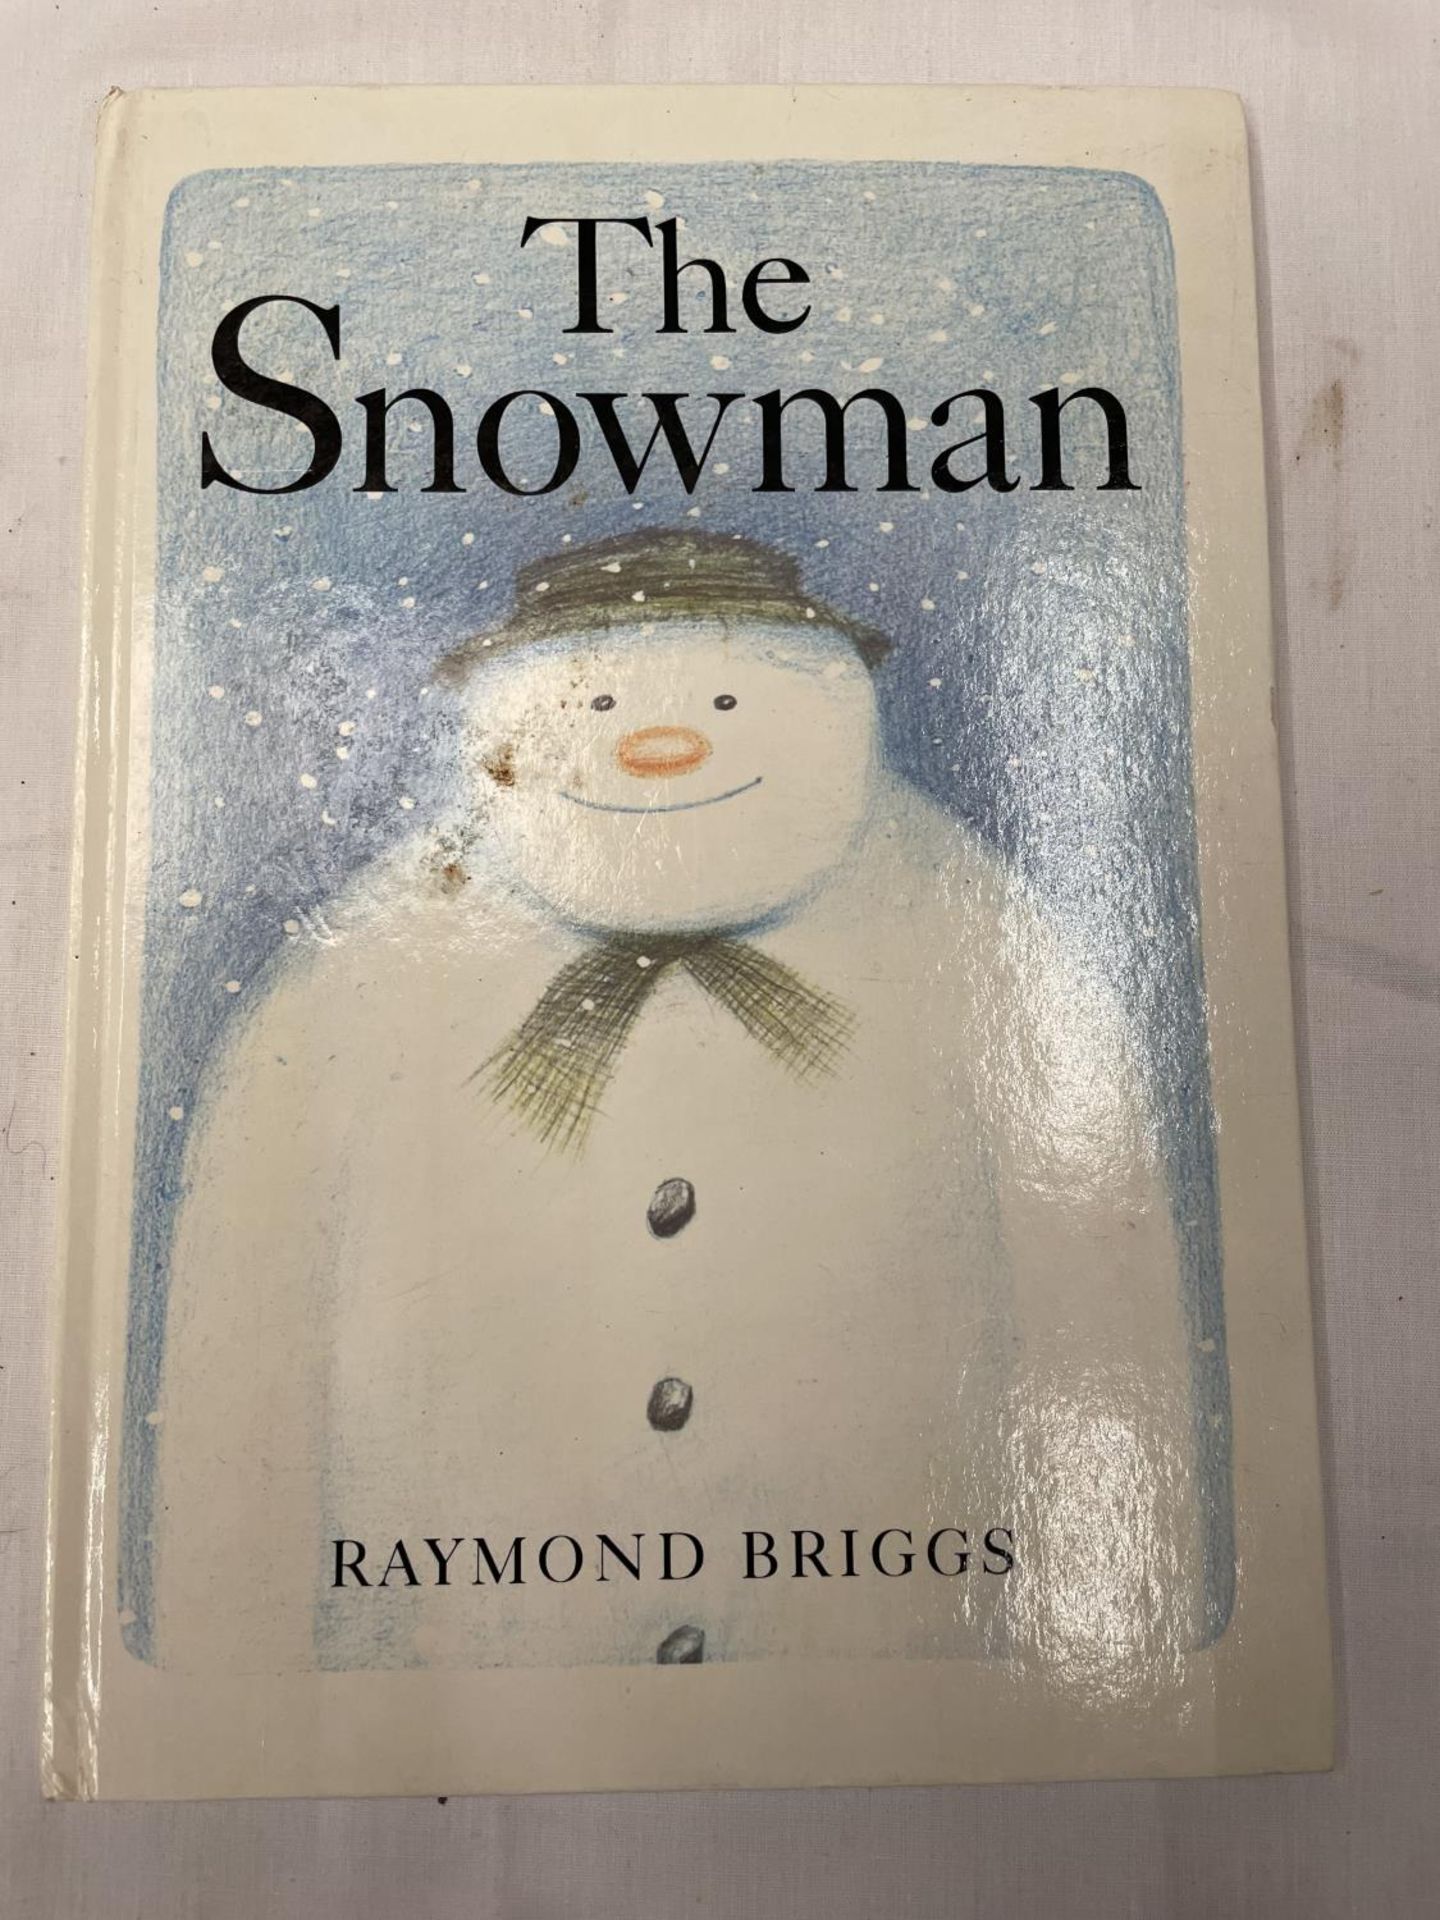 THE SNOWMAN BOOK BY RAYMOND BRIGGS